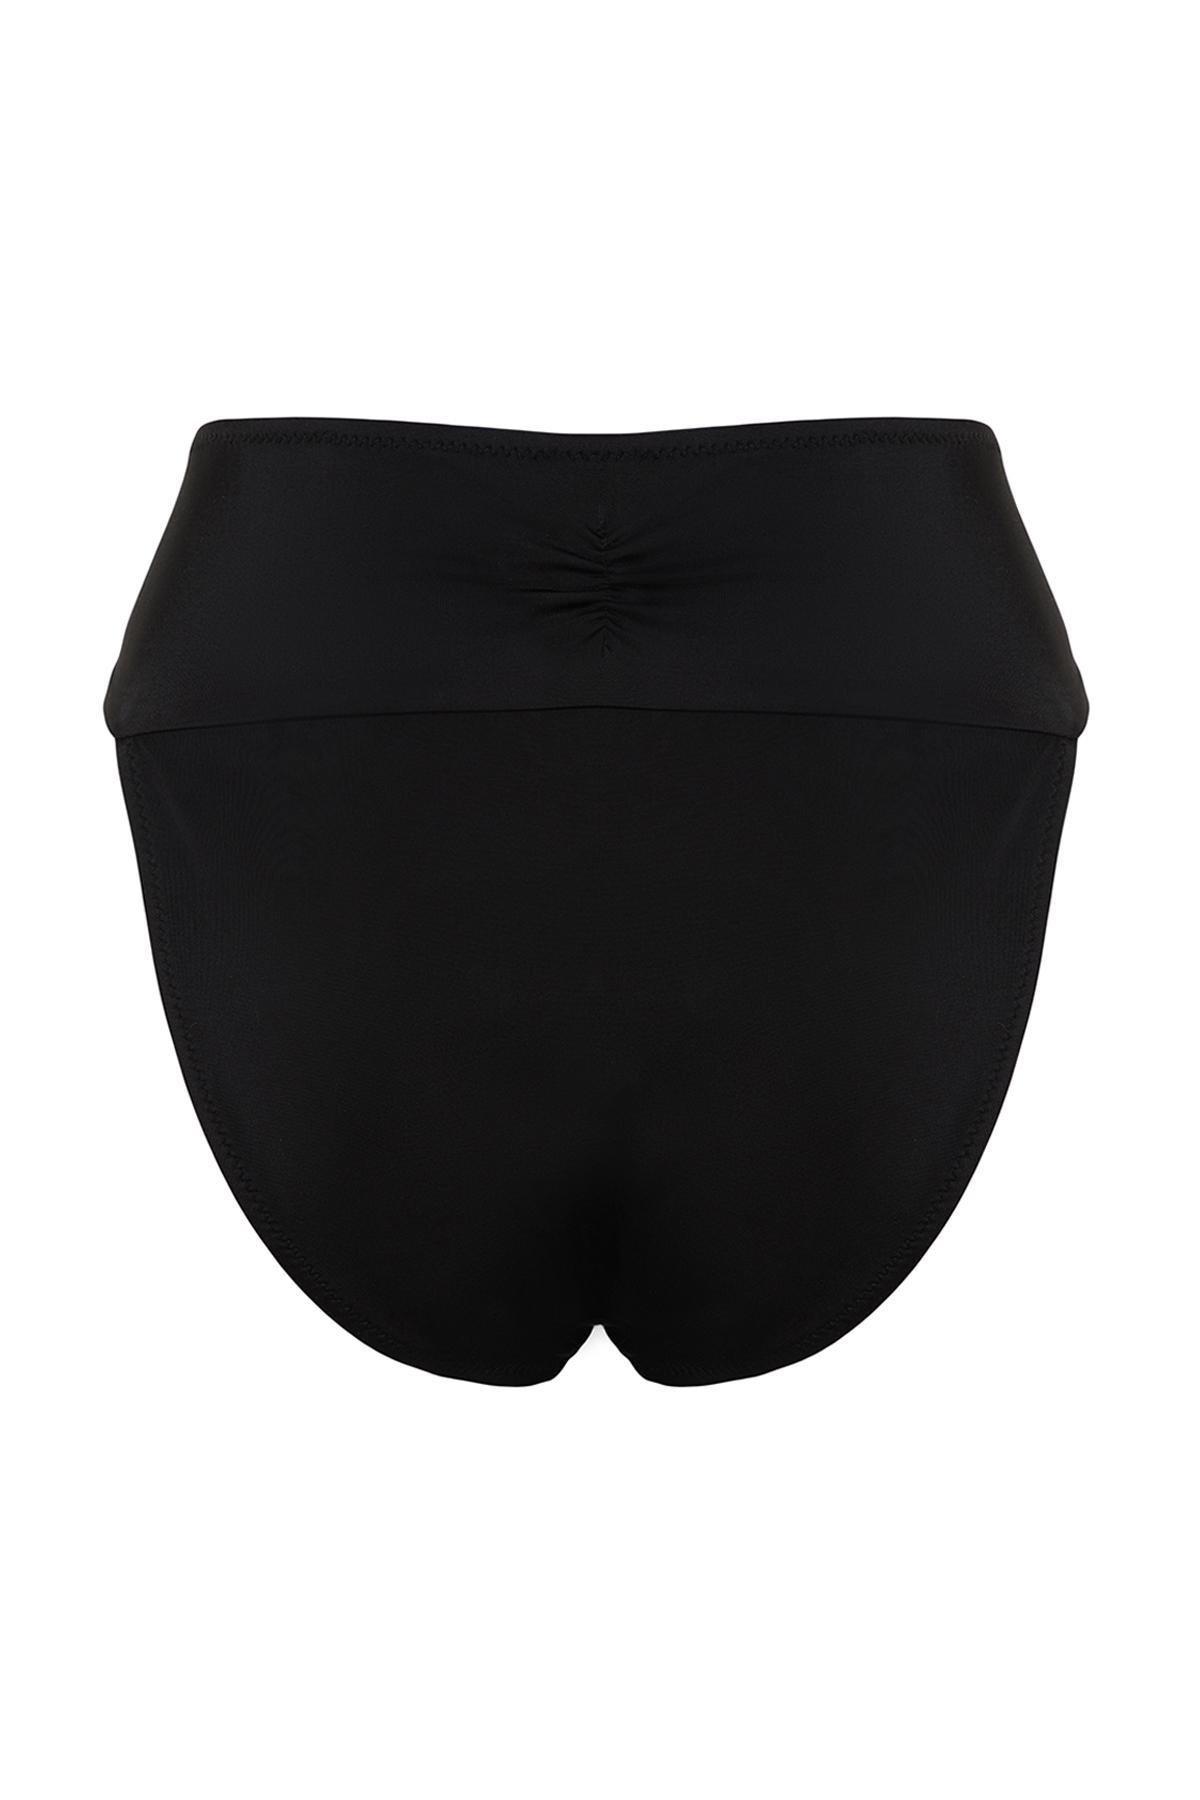 Trendyol - Black High Waist Bikini Bottom